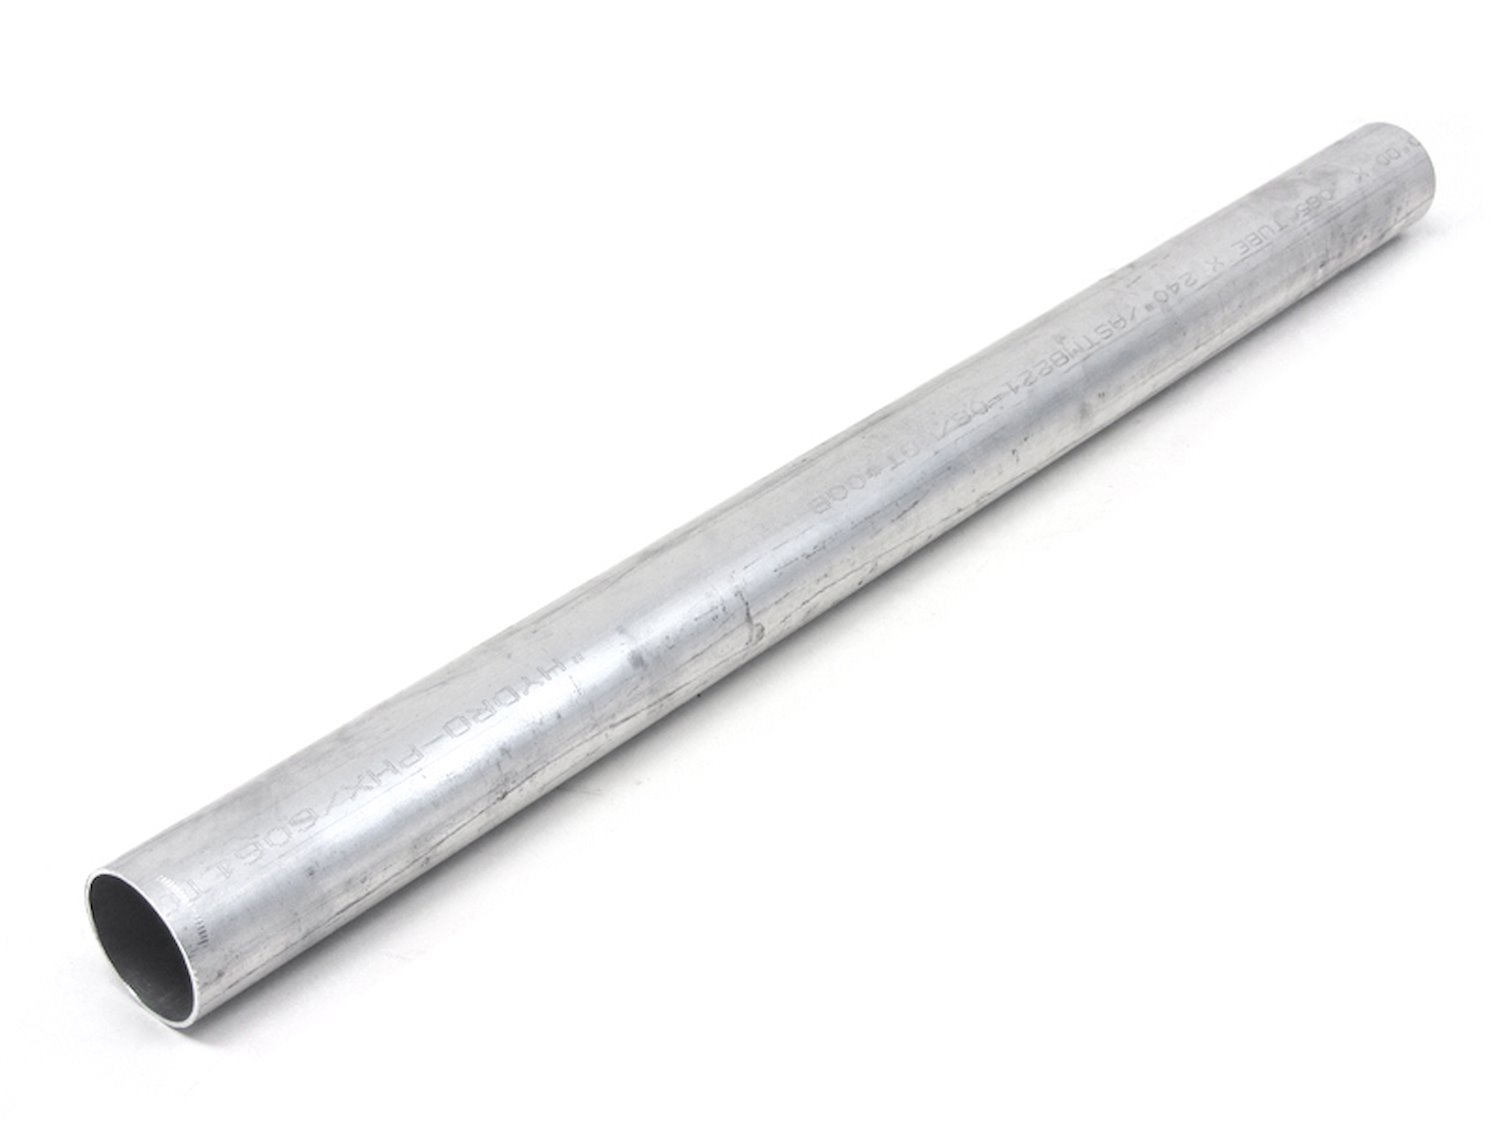 AST-2F-075 Aluminum Tubing, 6061 Aluminum, Straight Tubing, 3/4 in. OD, Seamless, Raw Finish, 2 ft. Long